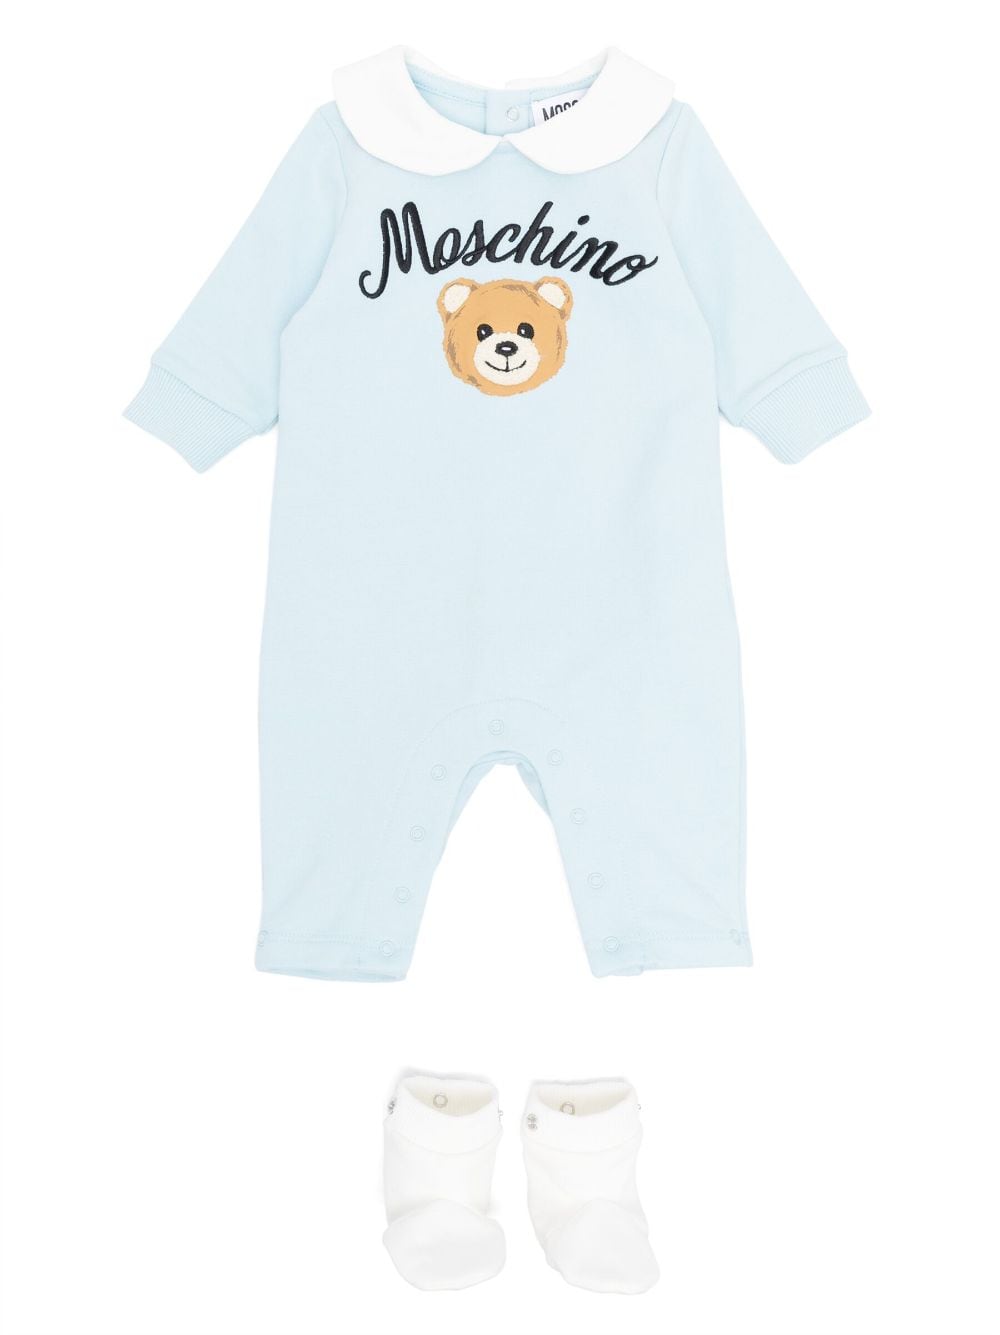 Baby blue onesie set with logo